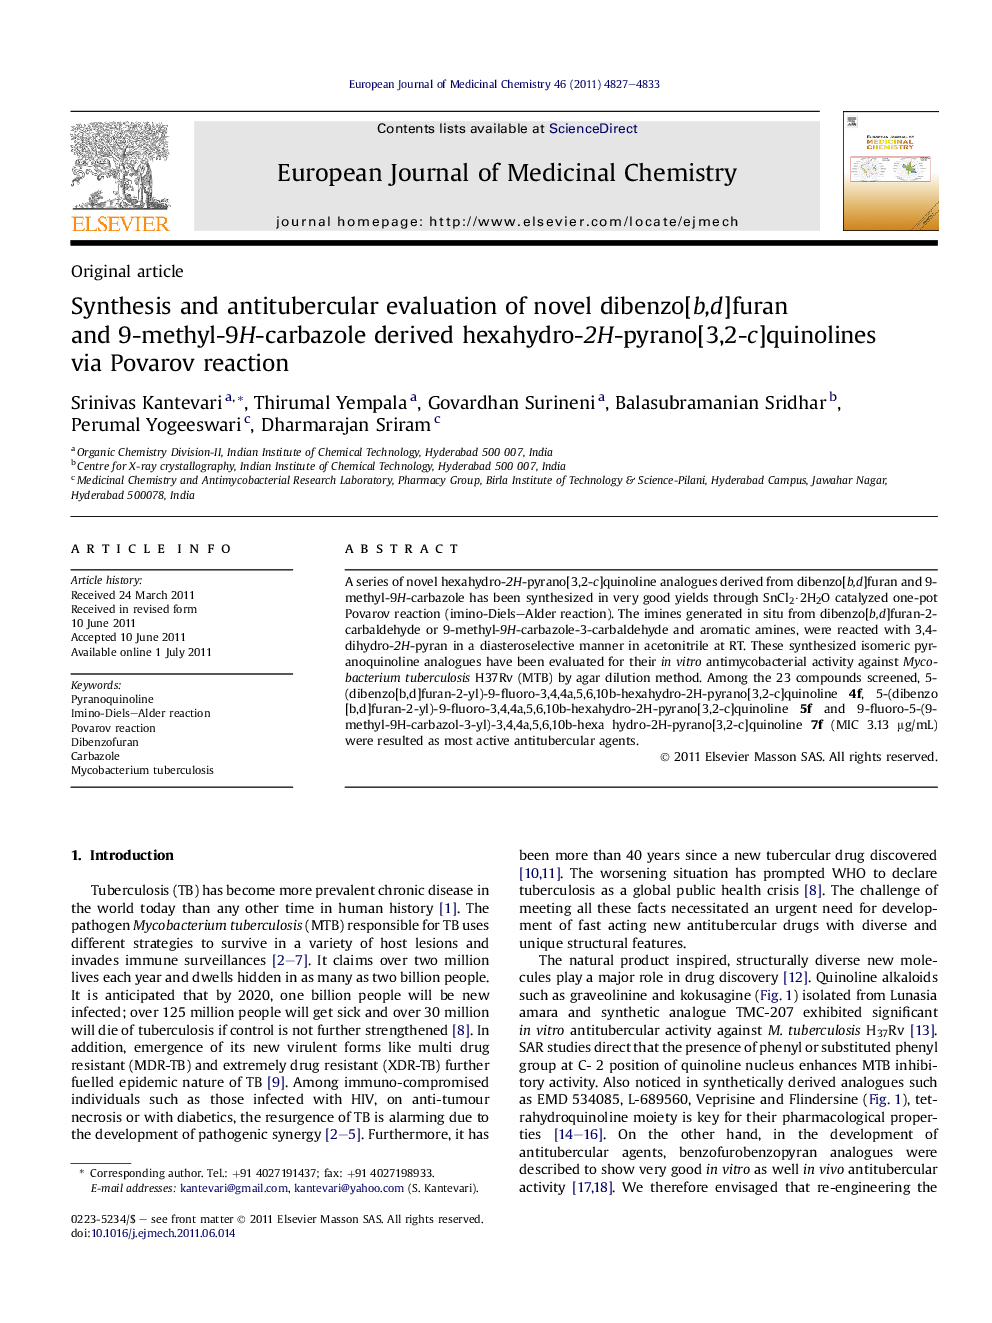 Synthesis and antitubercular evaluation of novel dibenzo[b,d]furan and 9-methyl-9H-carbazole derived hexahydro-2H-pyrano[3,2-c]quinolines via Povarov reaction